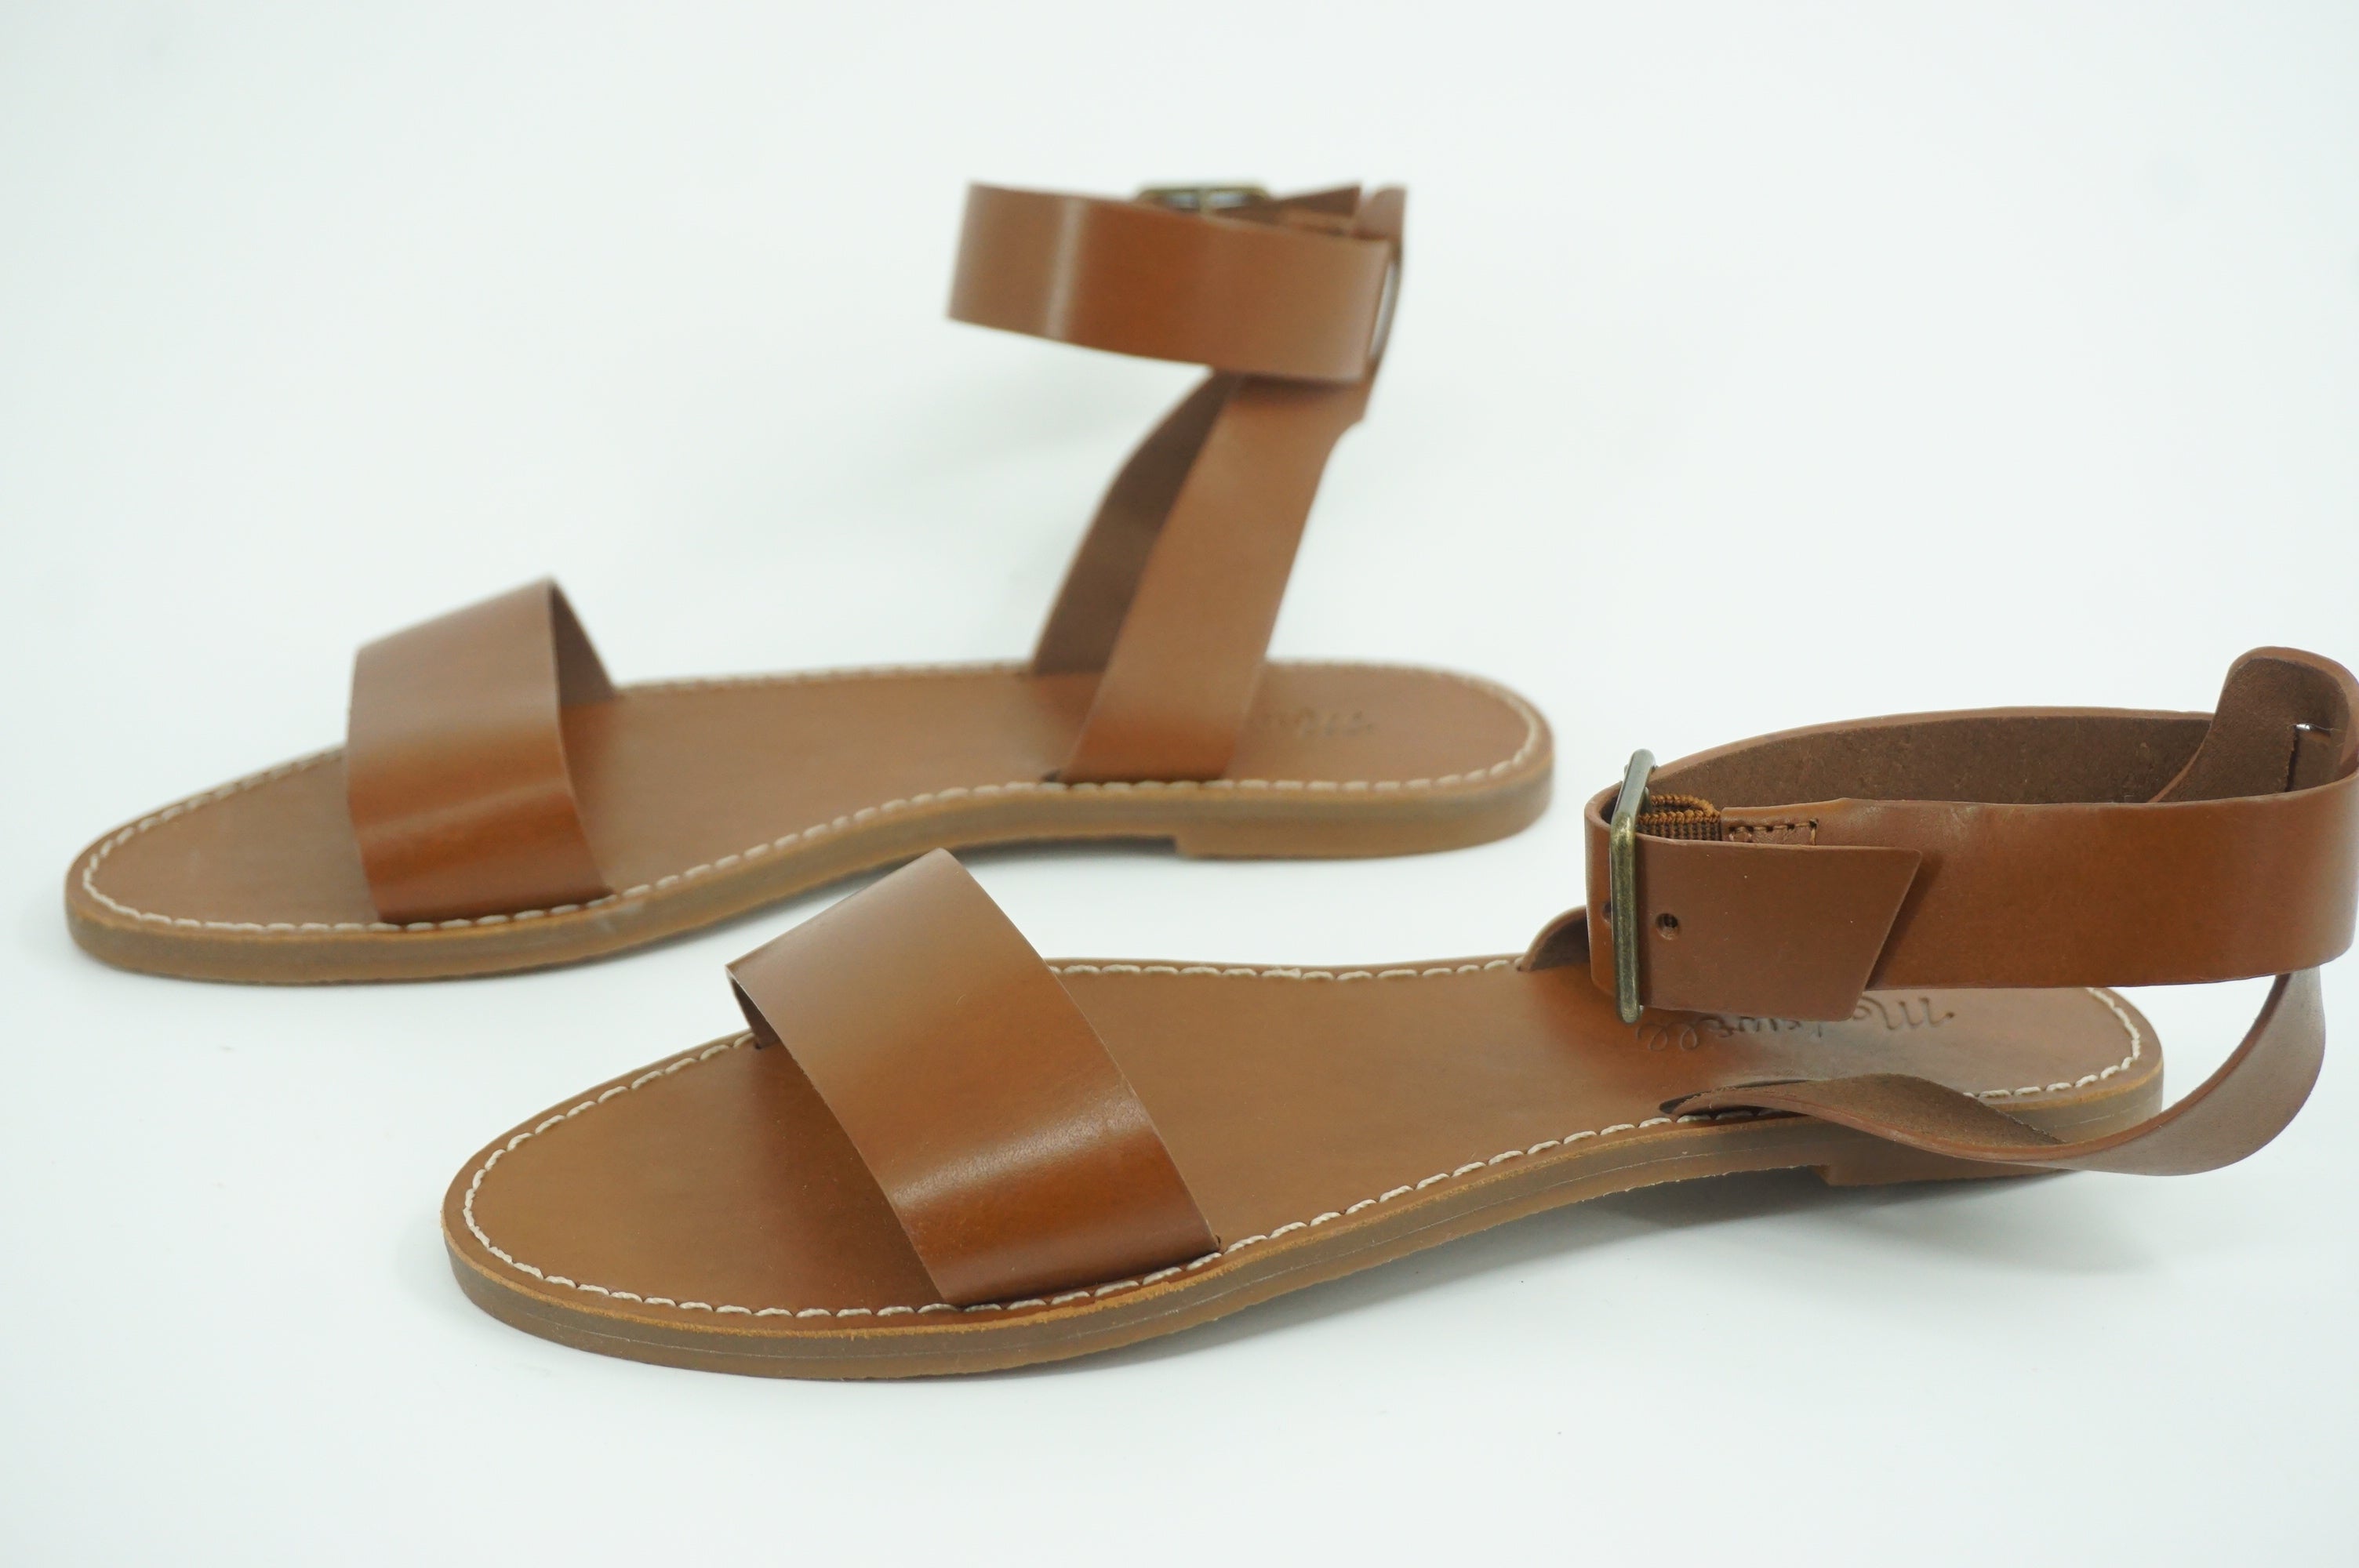 Madewell The Boardsalk Ankle Strap Flat Sandals Size 7M Women's $59 New Open Toe